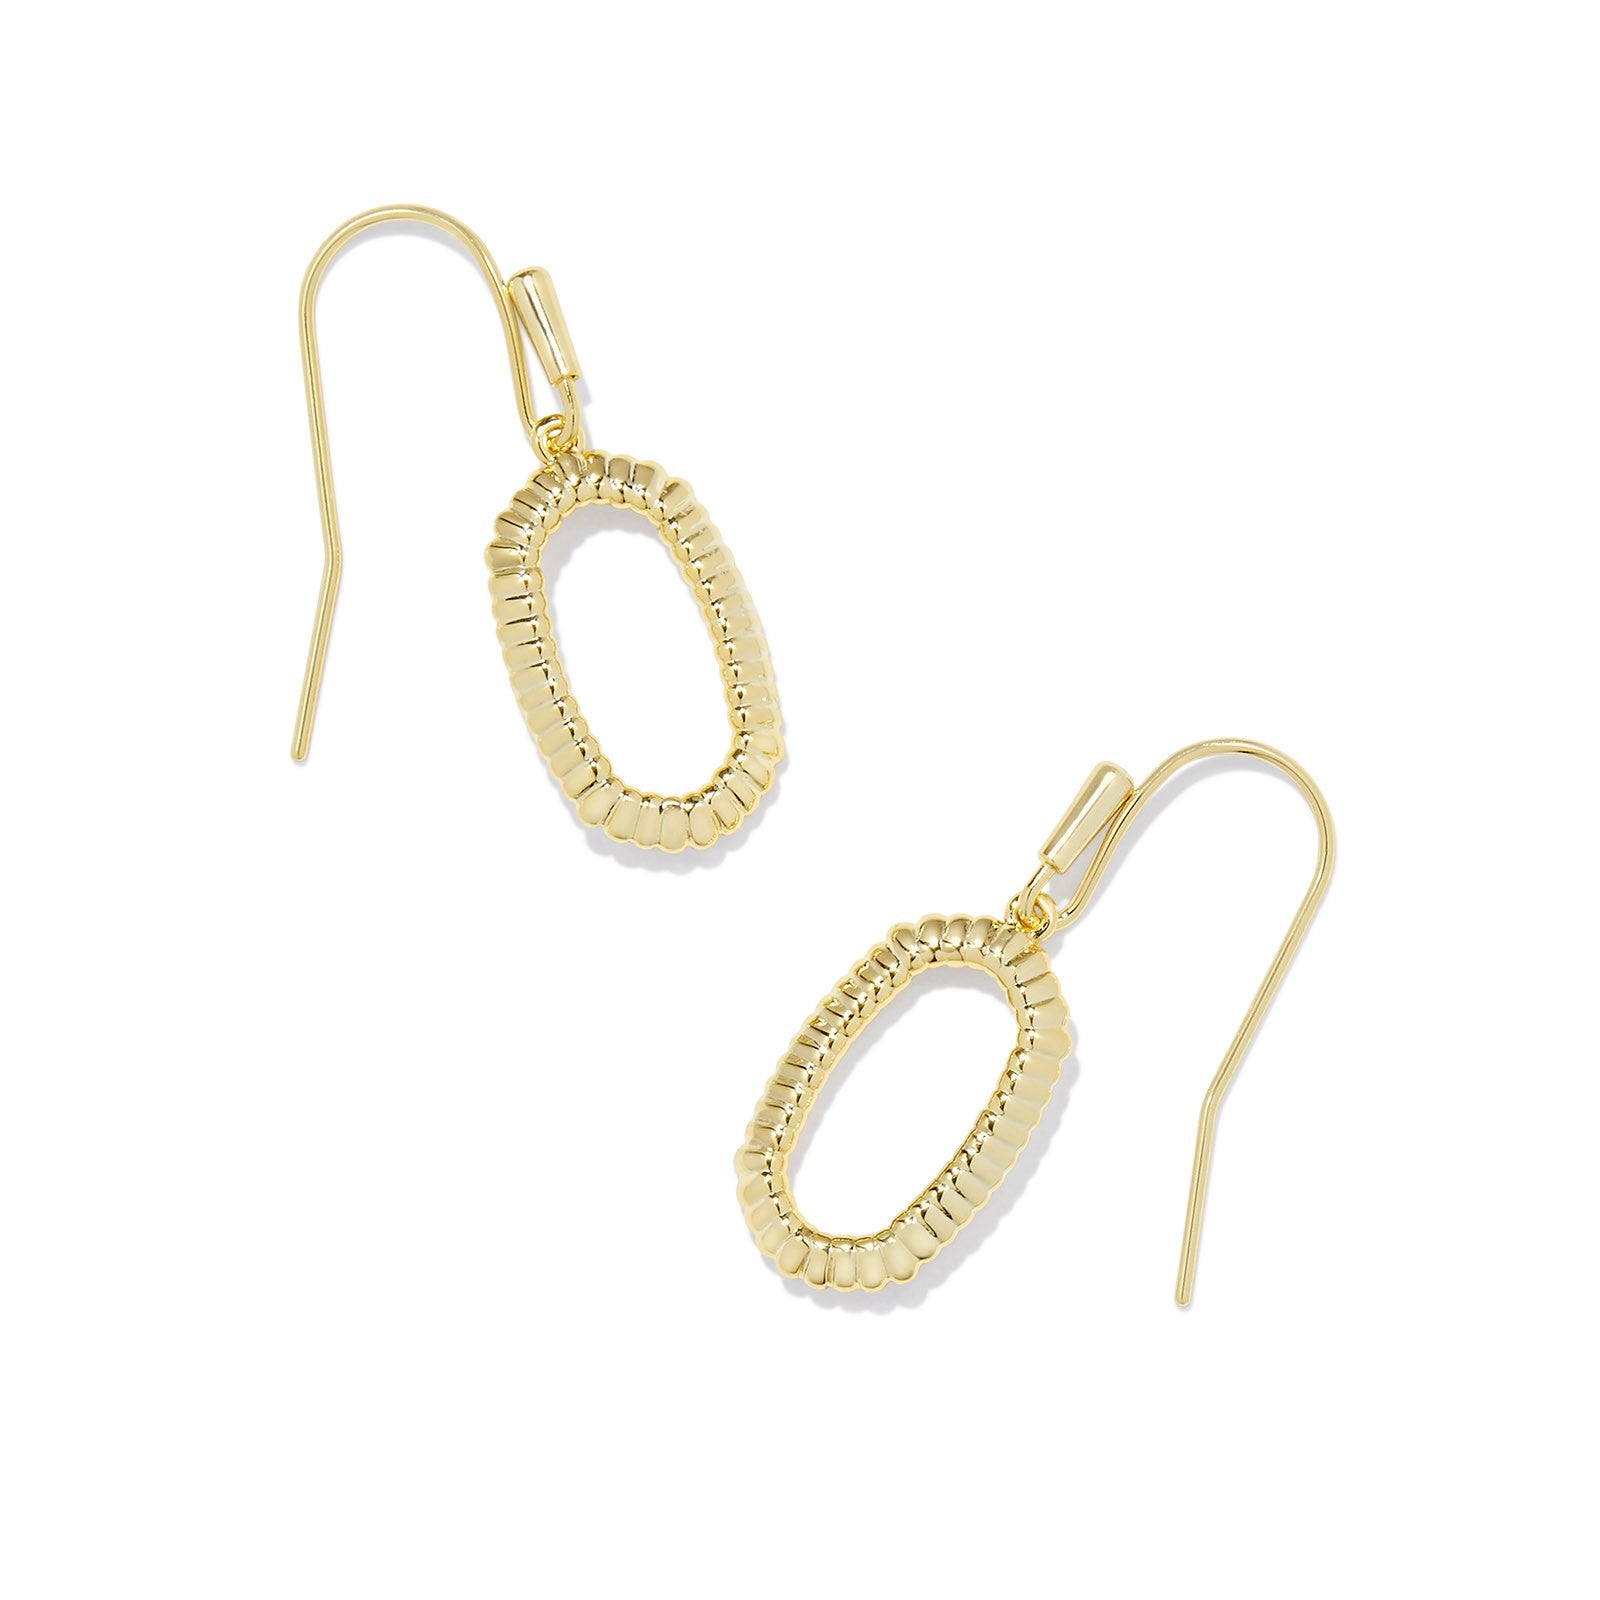 Kendra Scott | Lee Ridge Open Frame Earrings in Gold - Giddy Up Glamour Boutique